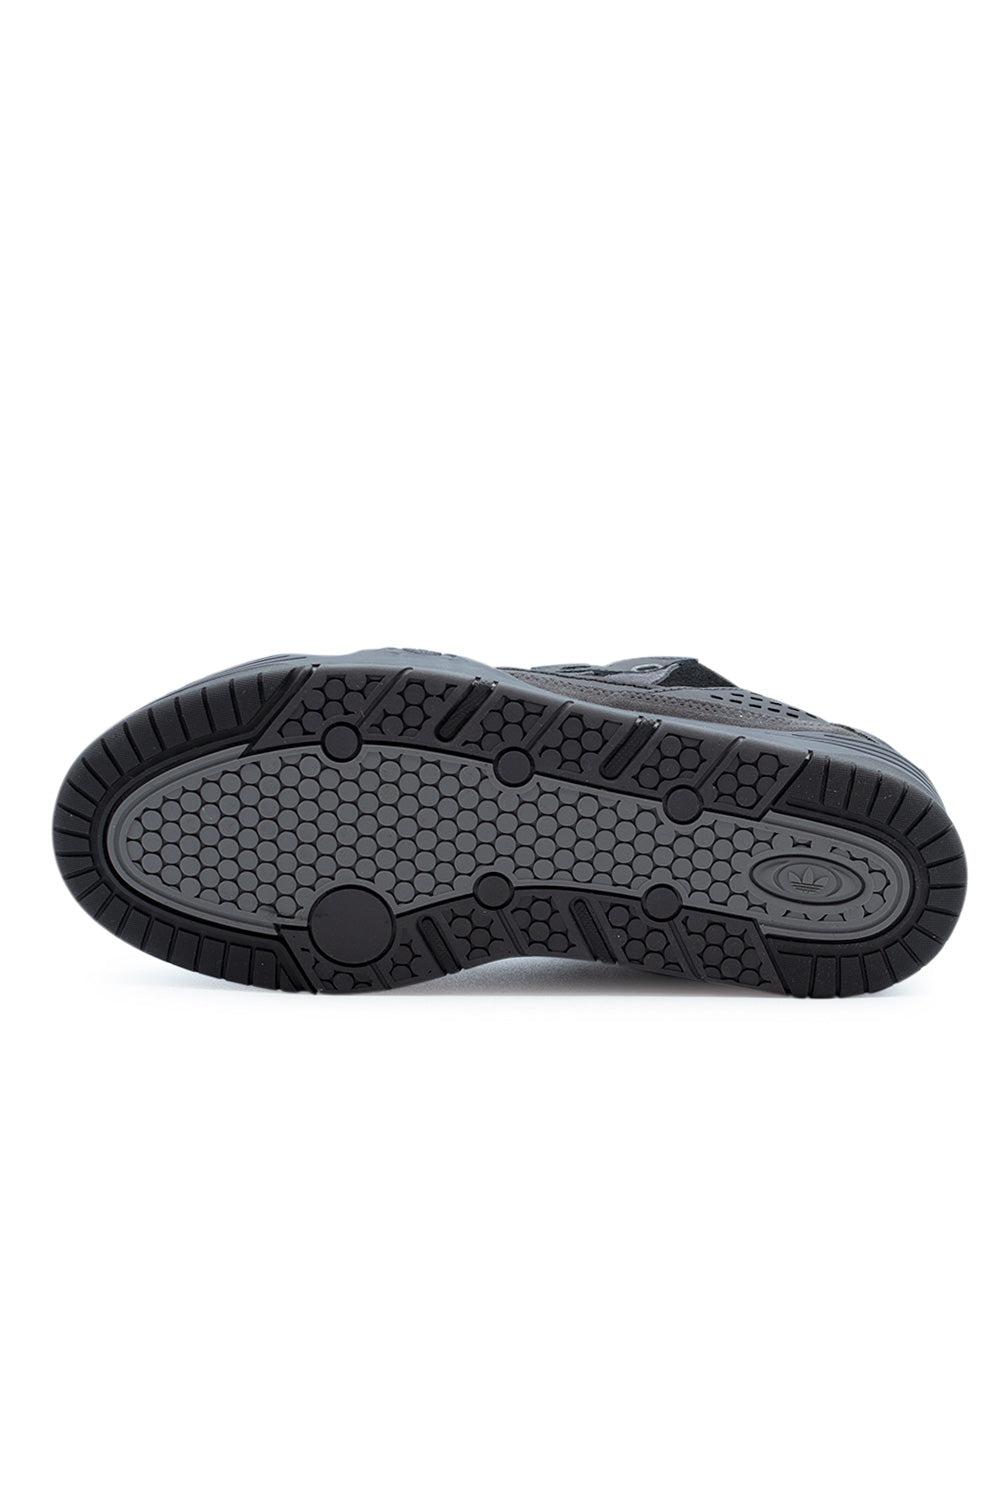 Adidas Adi2000 Shoe | BONKERS Black Black / / Core Utility Black Utility